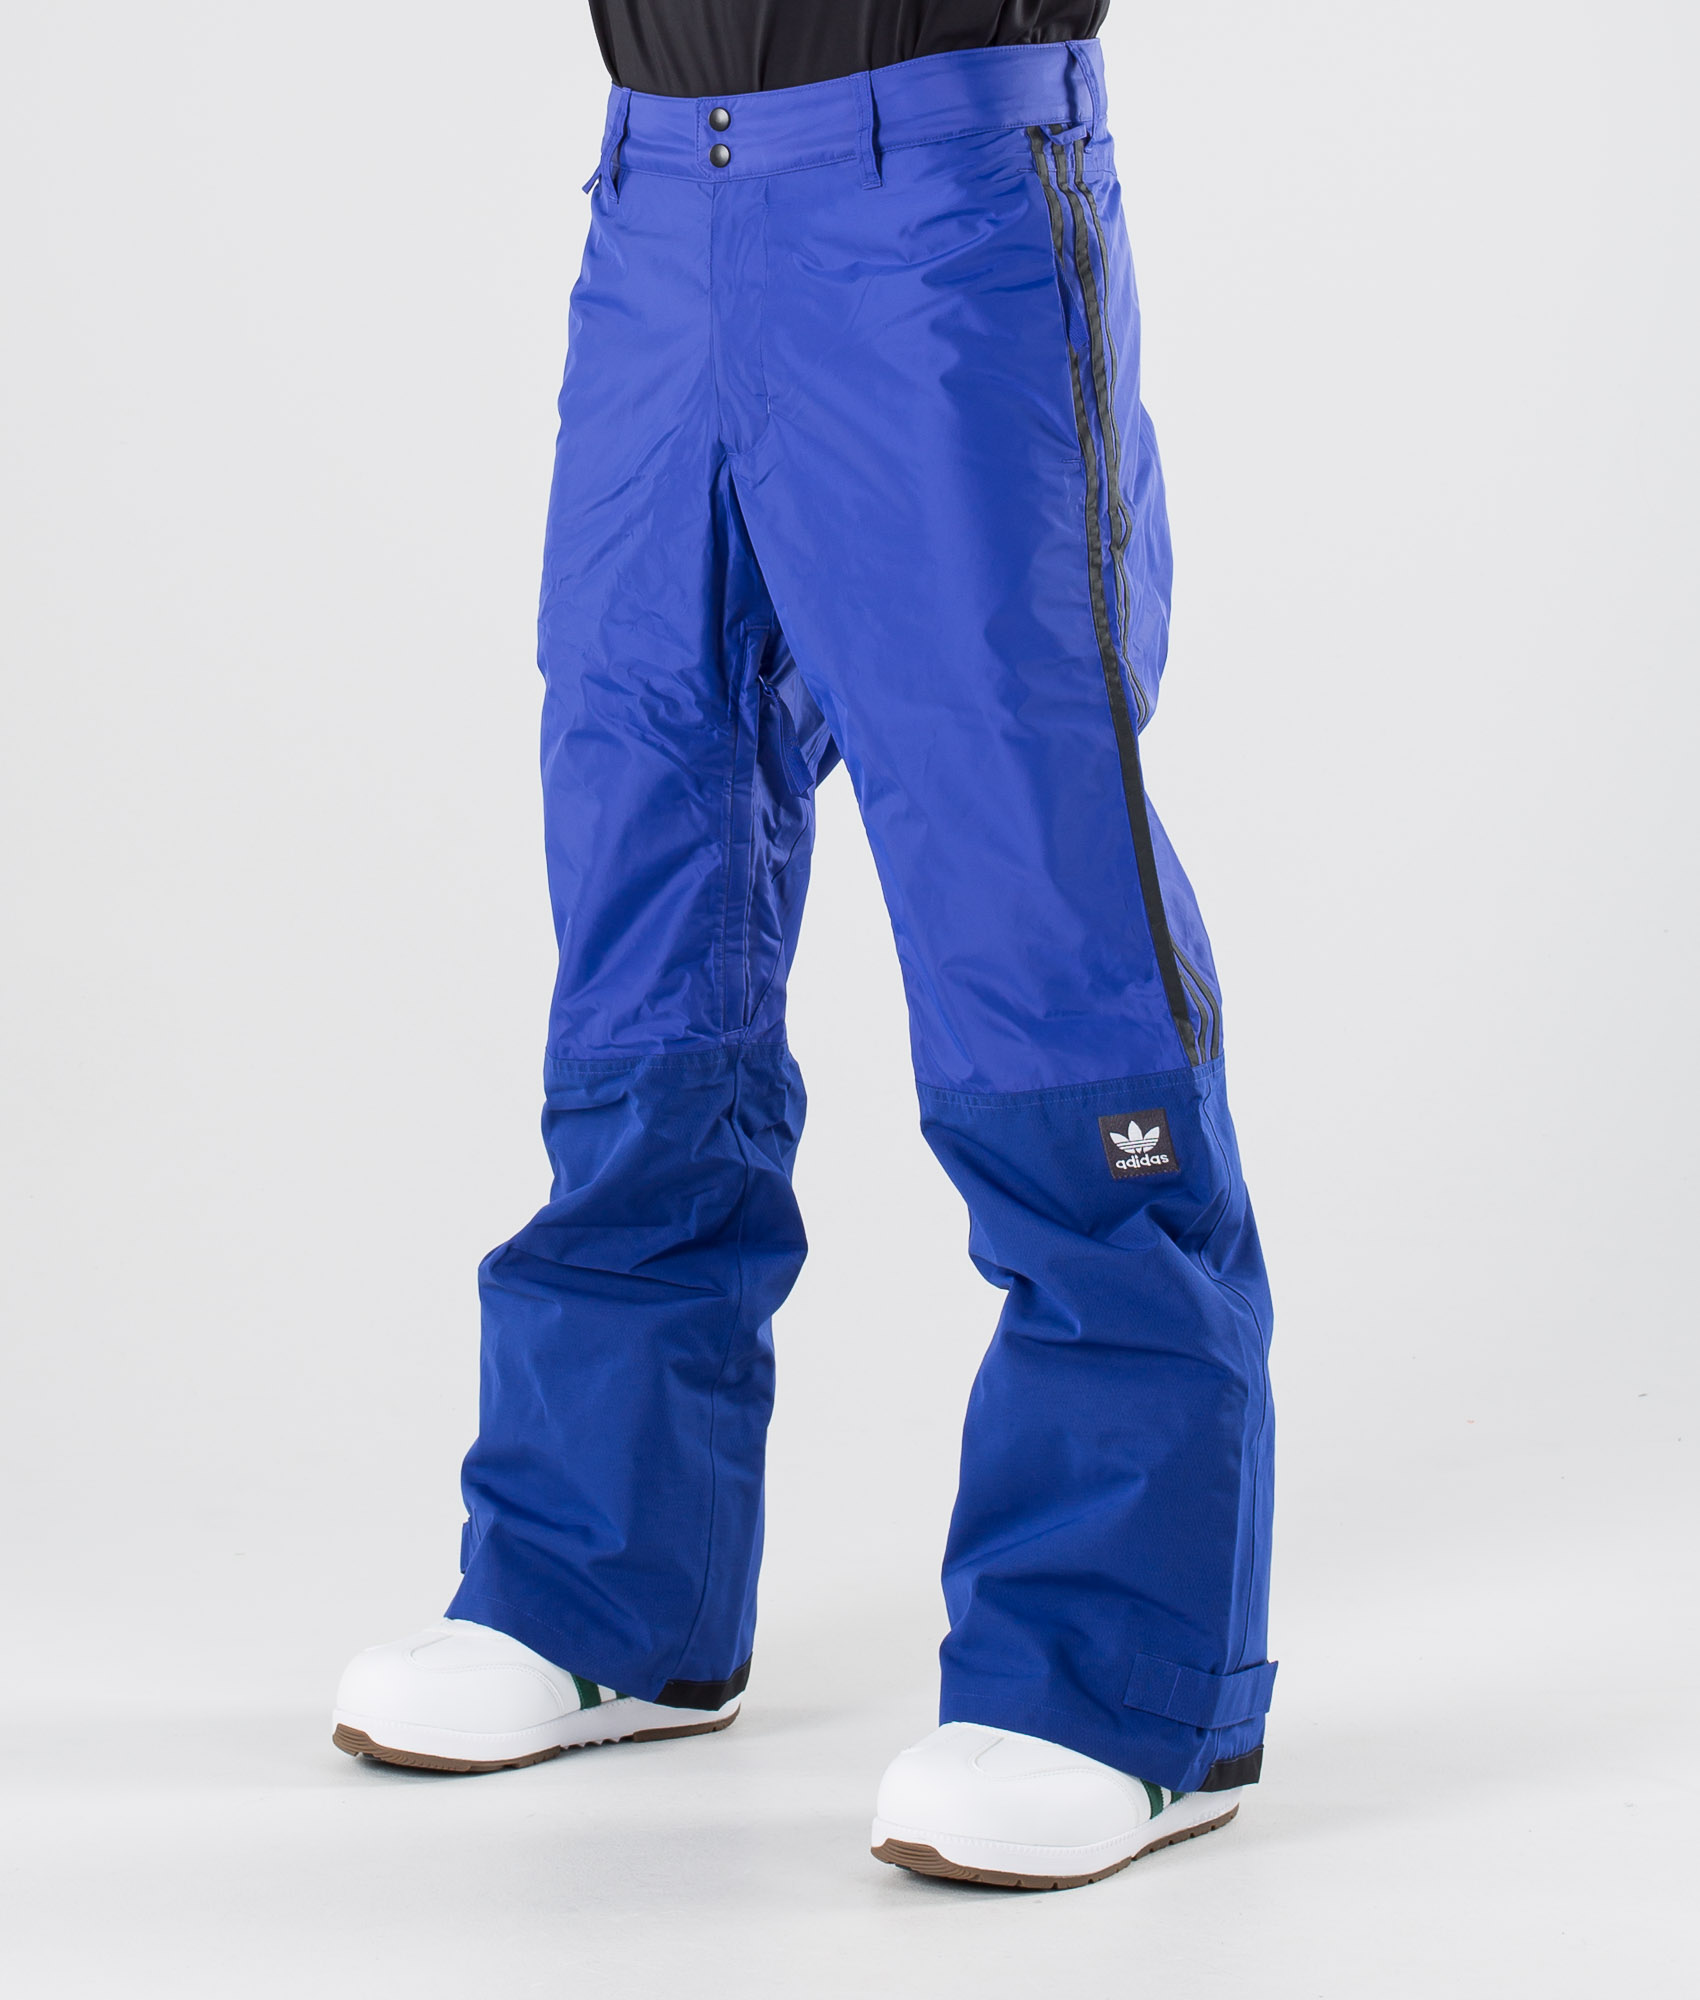 adidas snowboarding gear